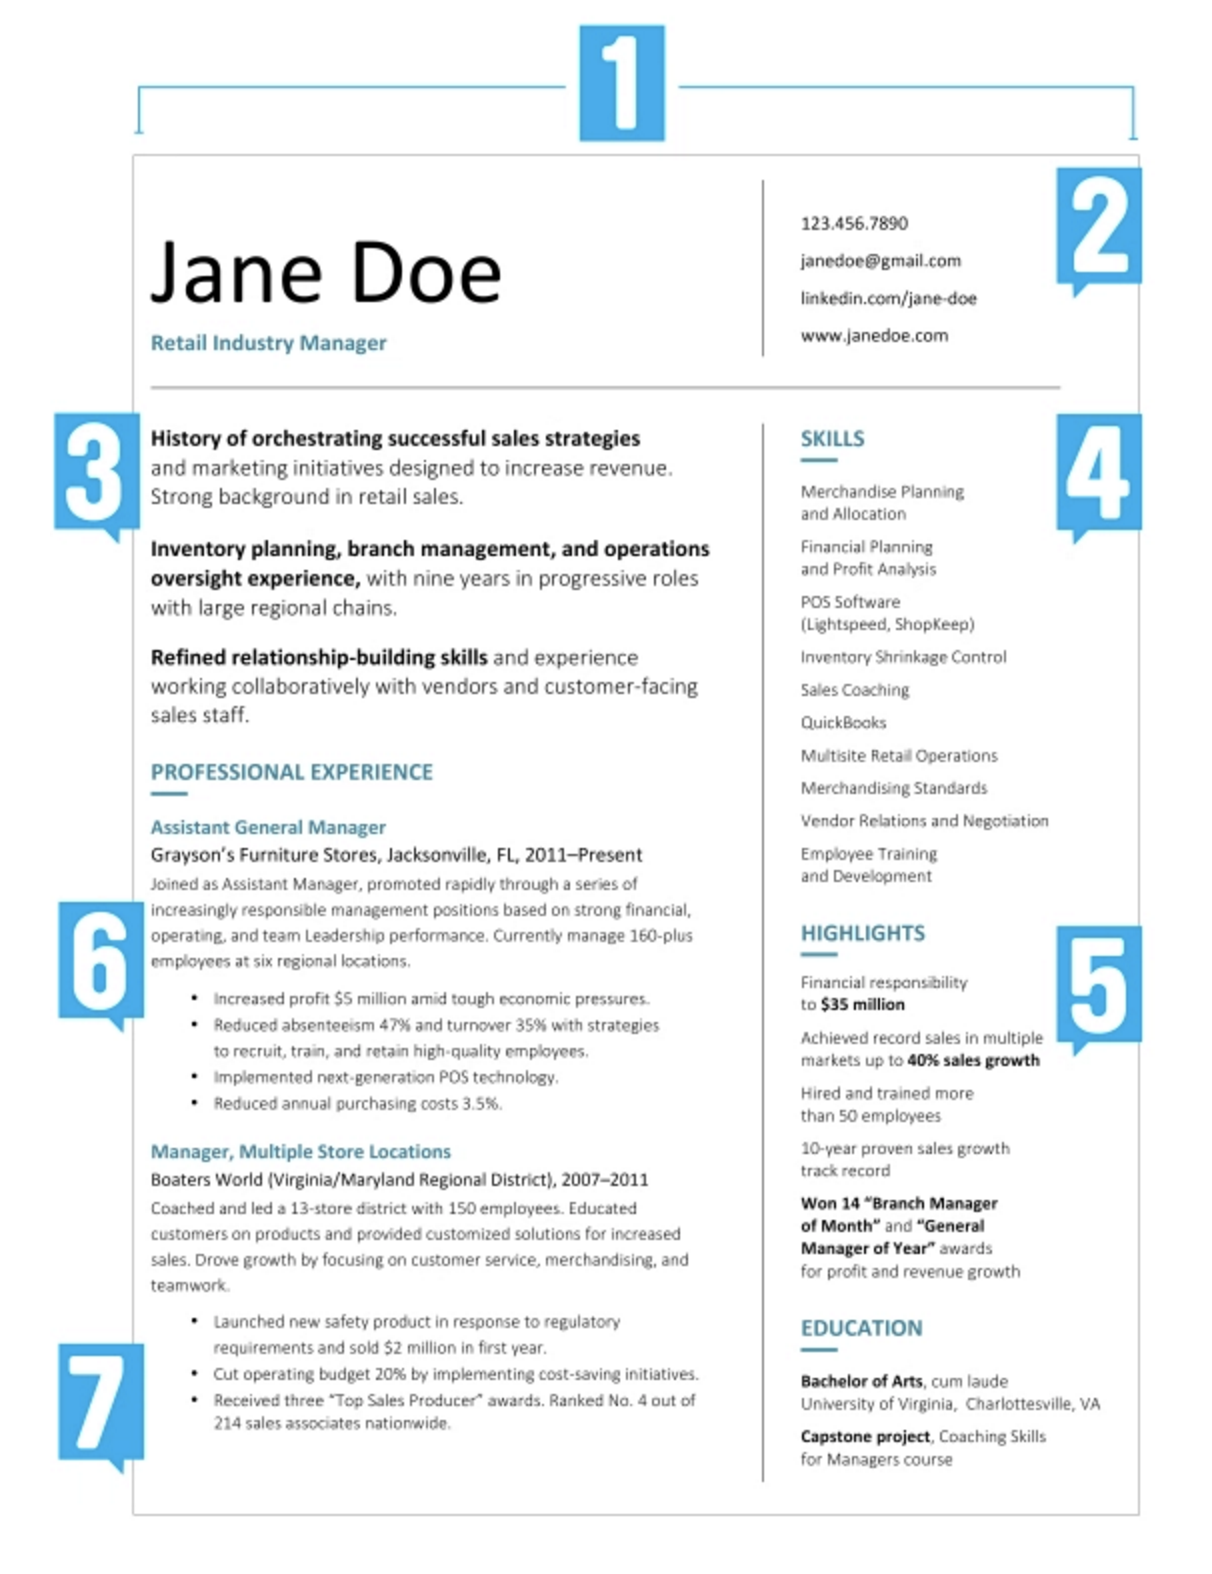 Image of a skills-based resume in the name of John Doe